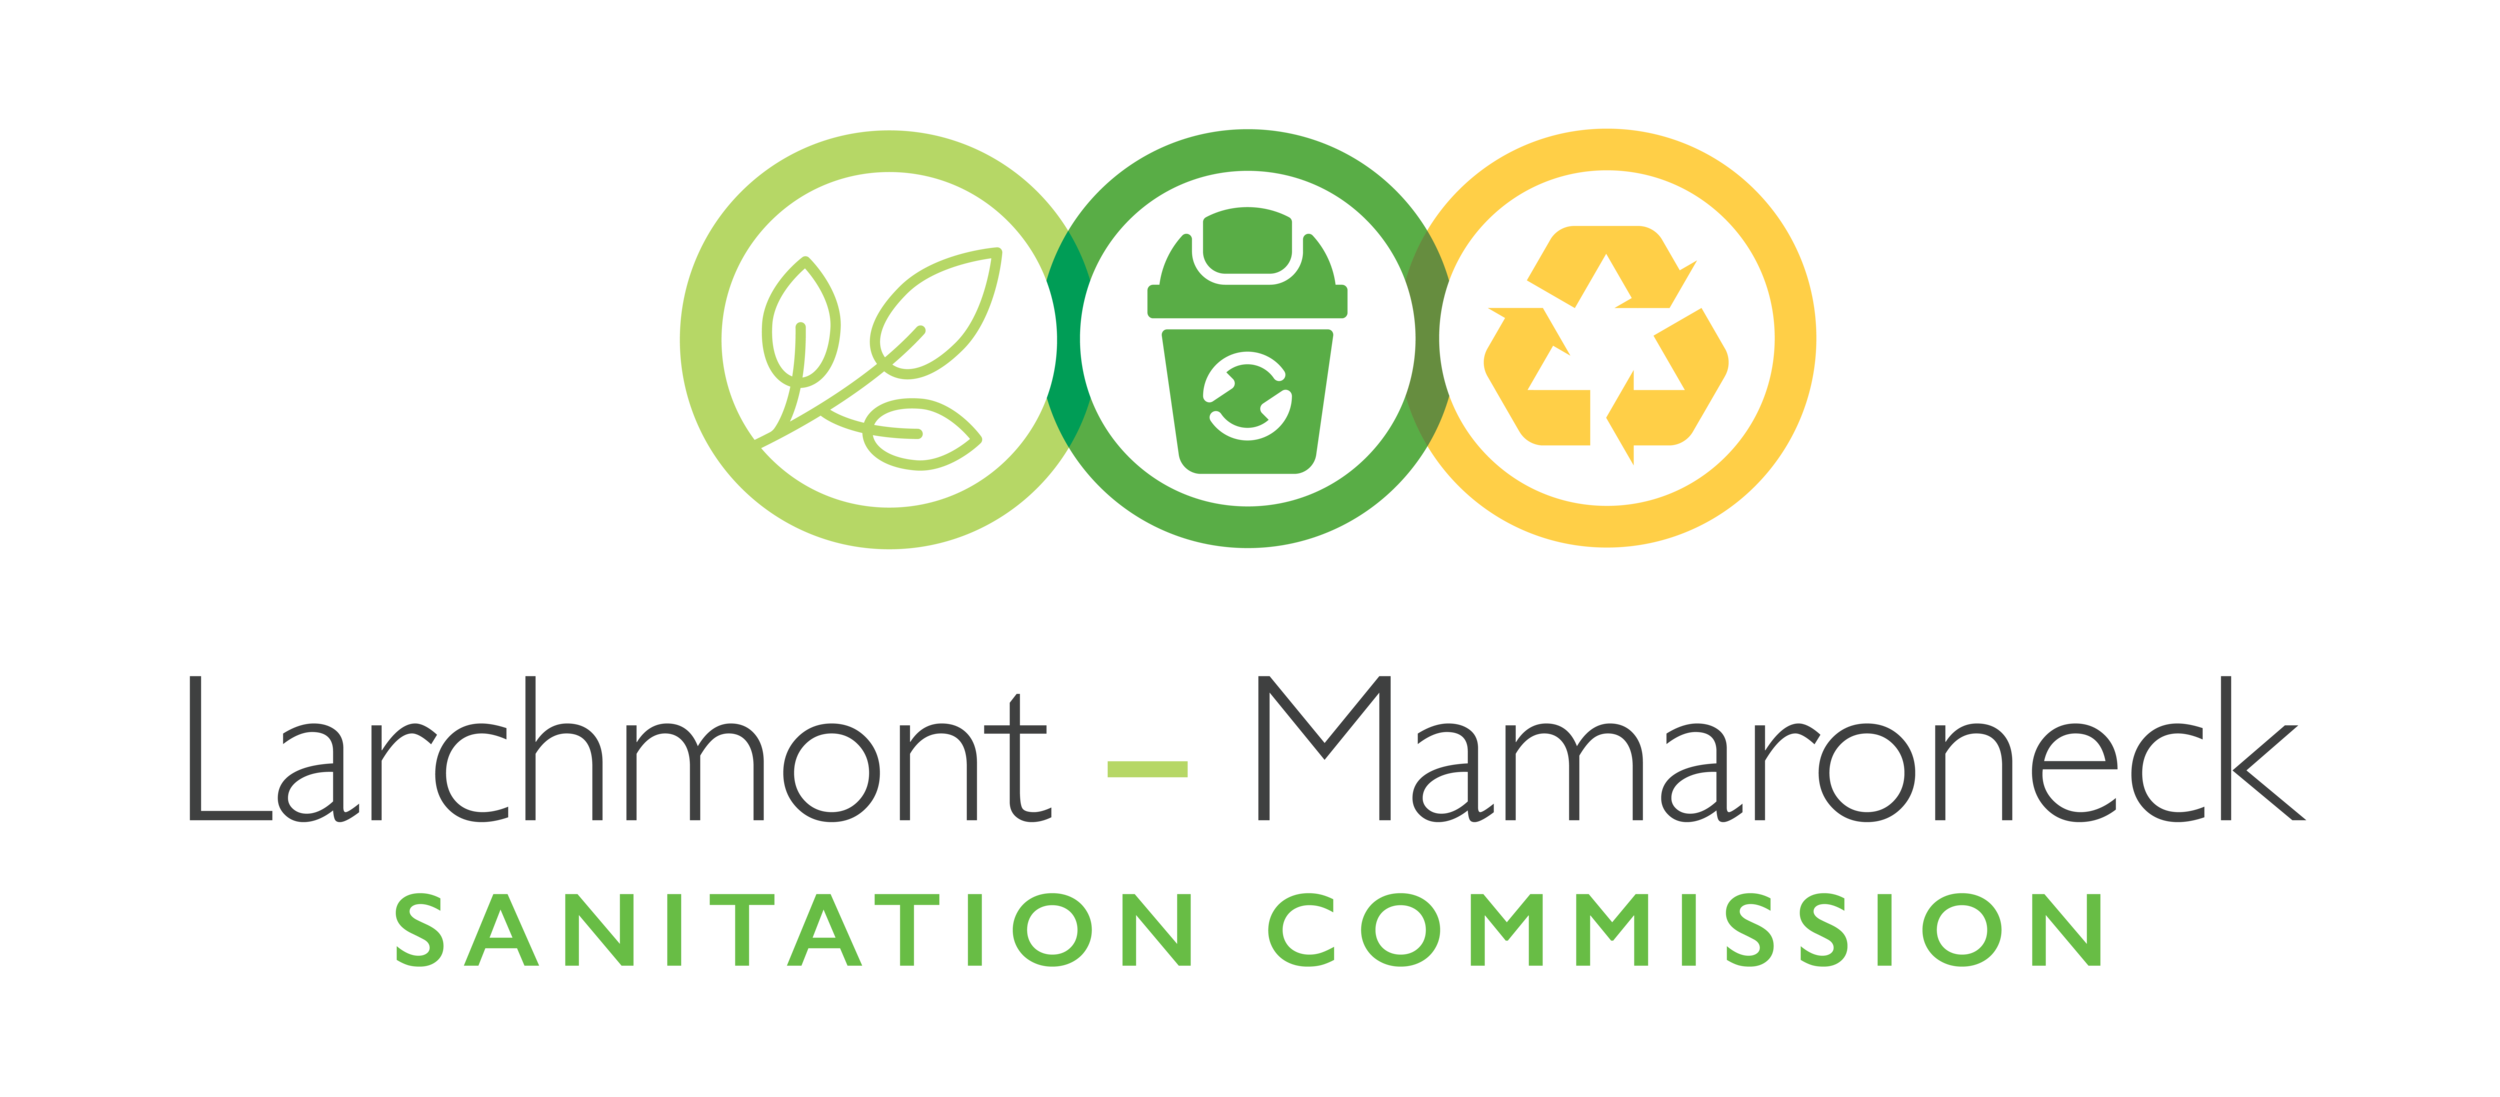 Larchmont - Mamaroneck Sanitation Commission